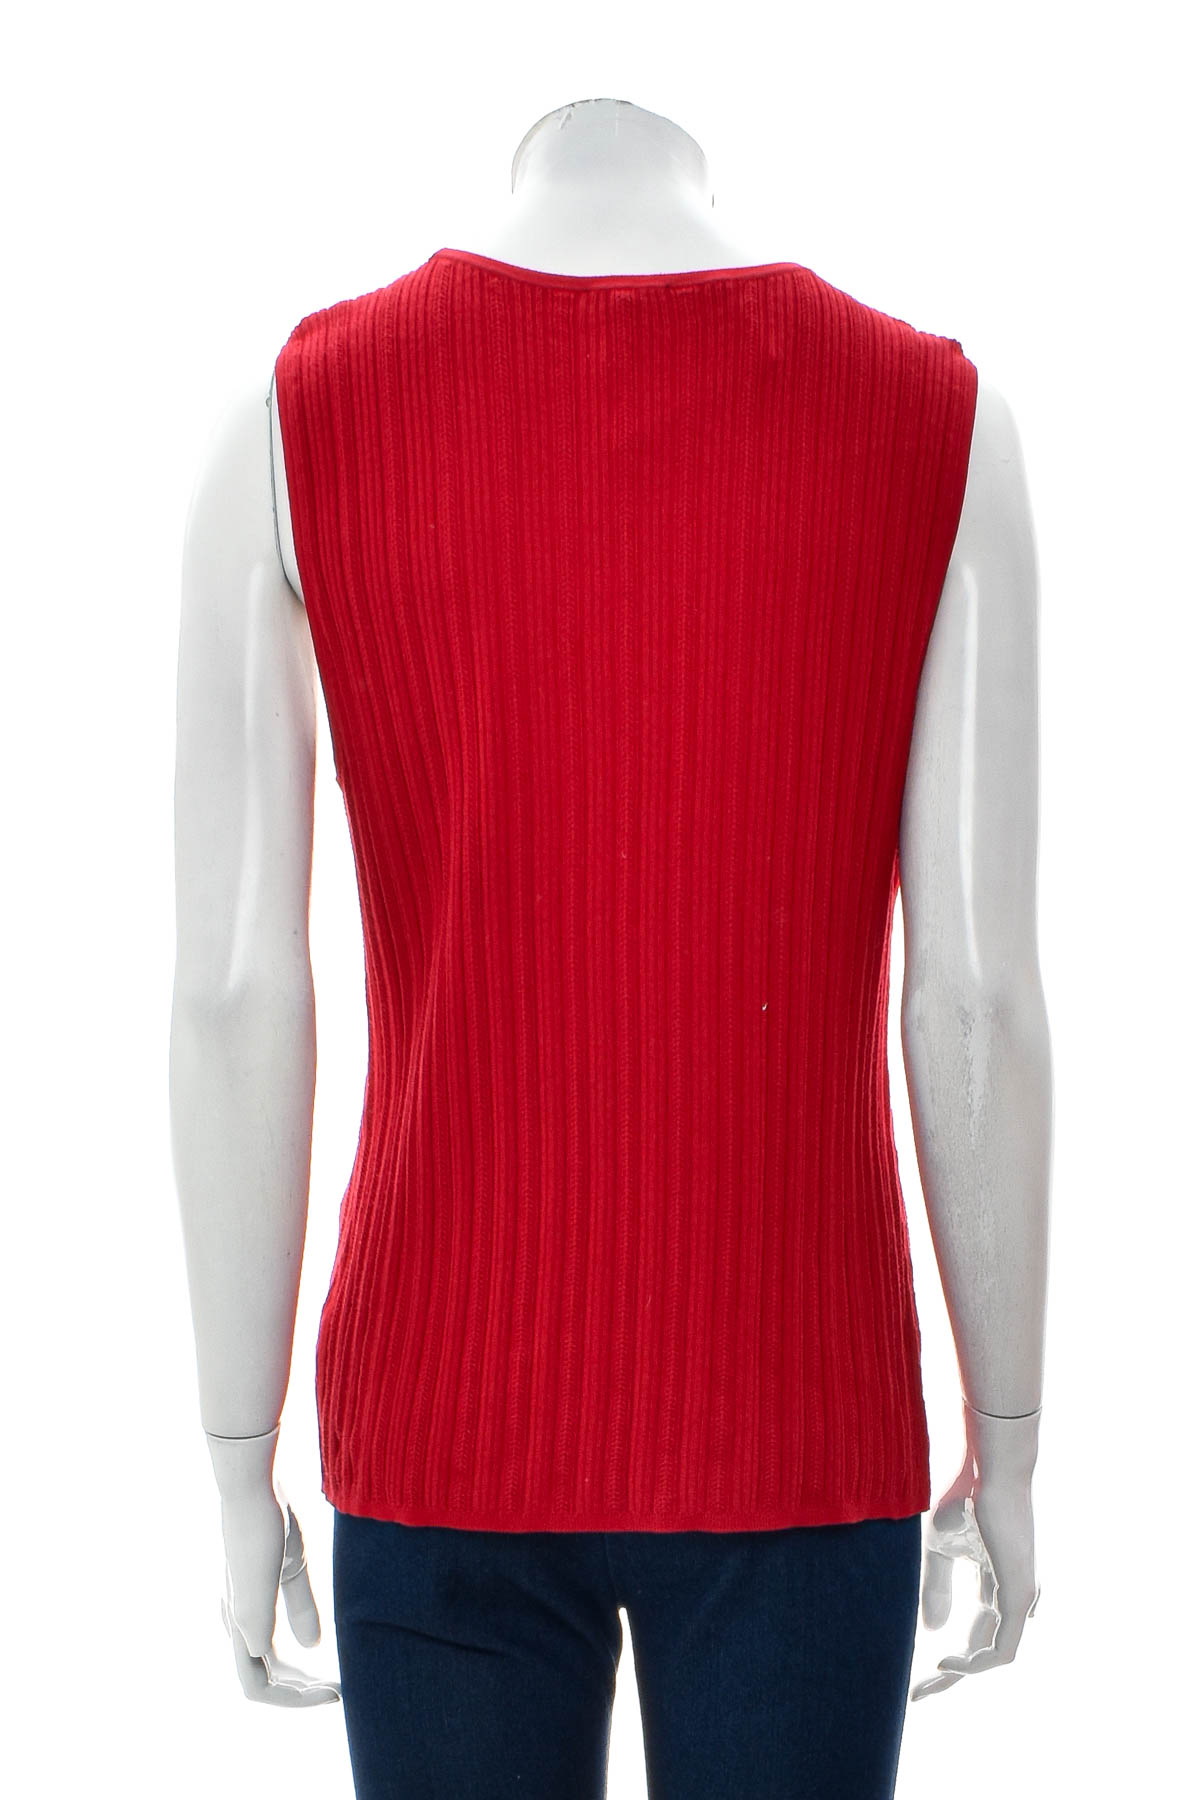 Women's sweater - Talbots - 1